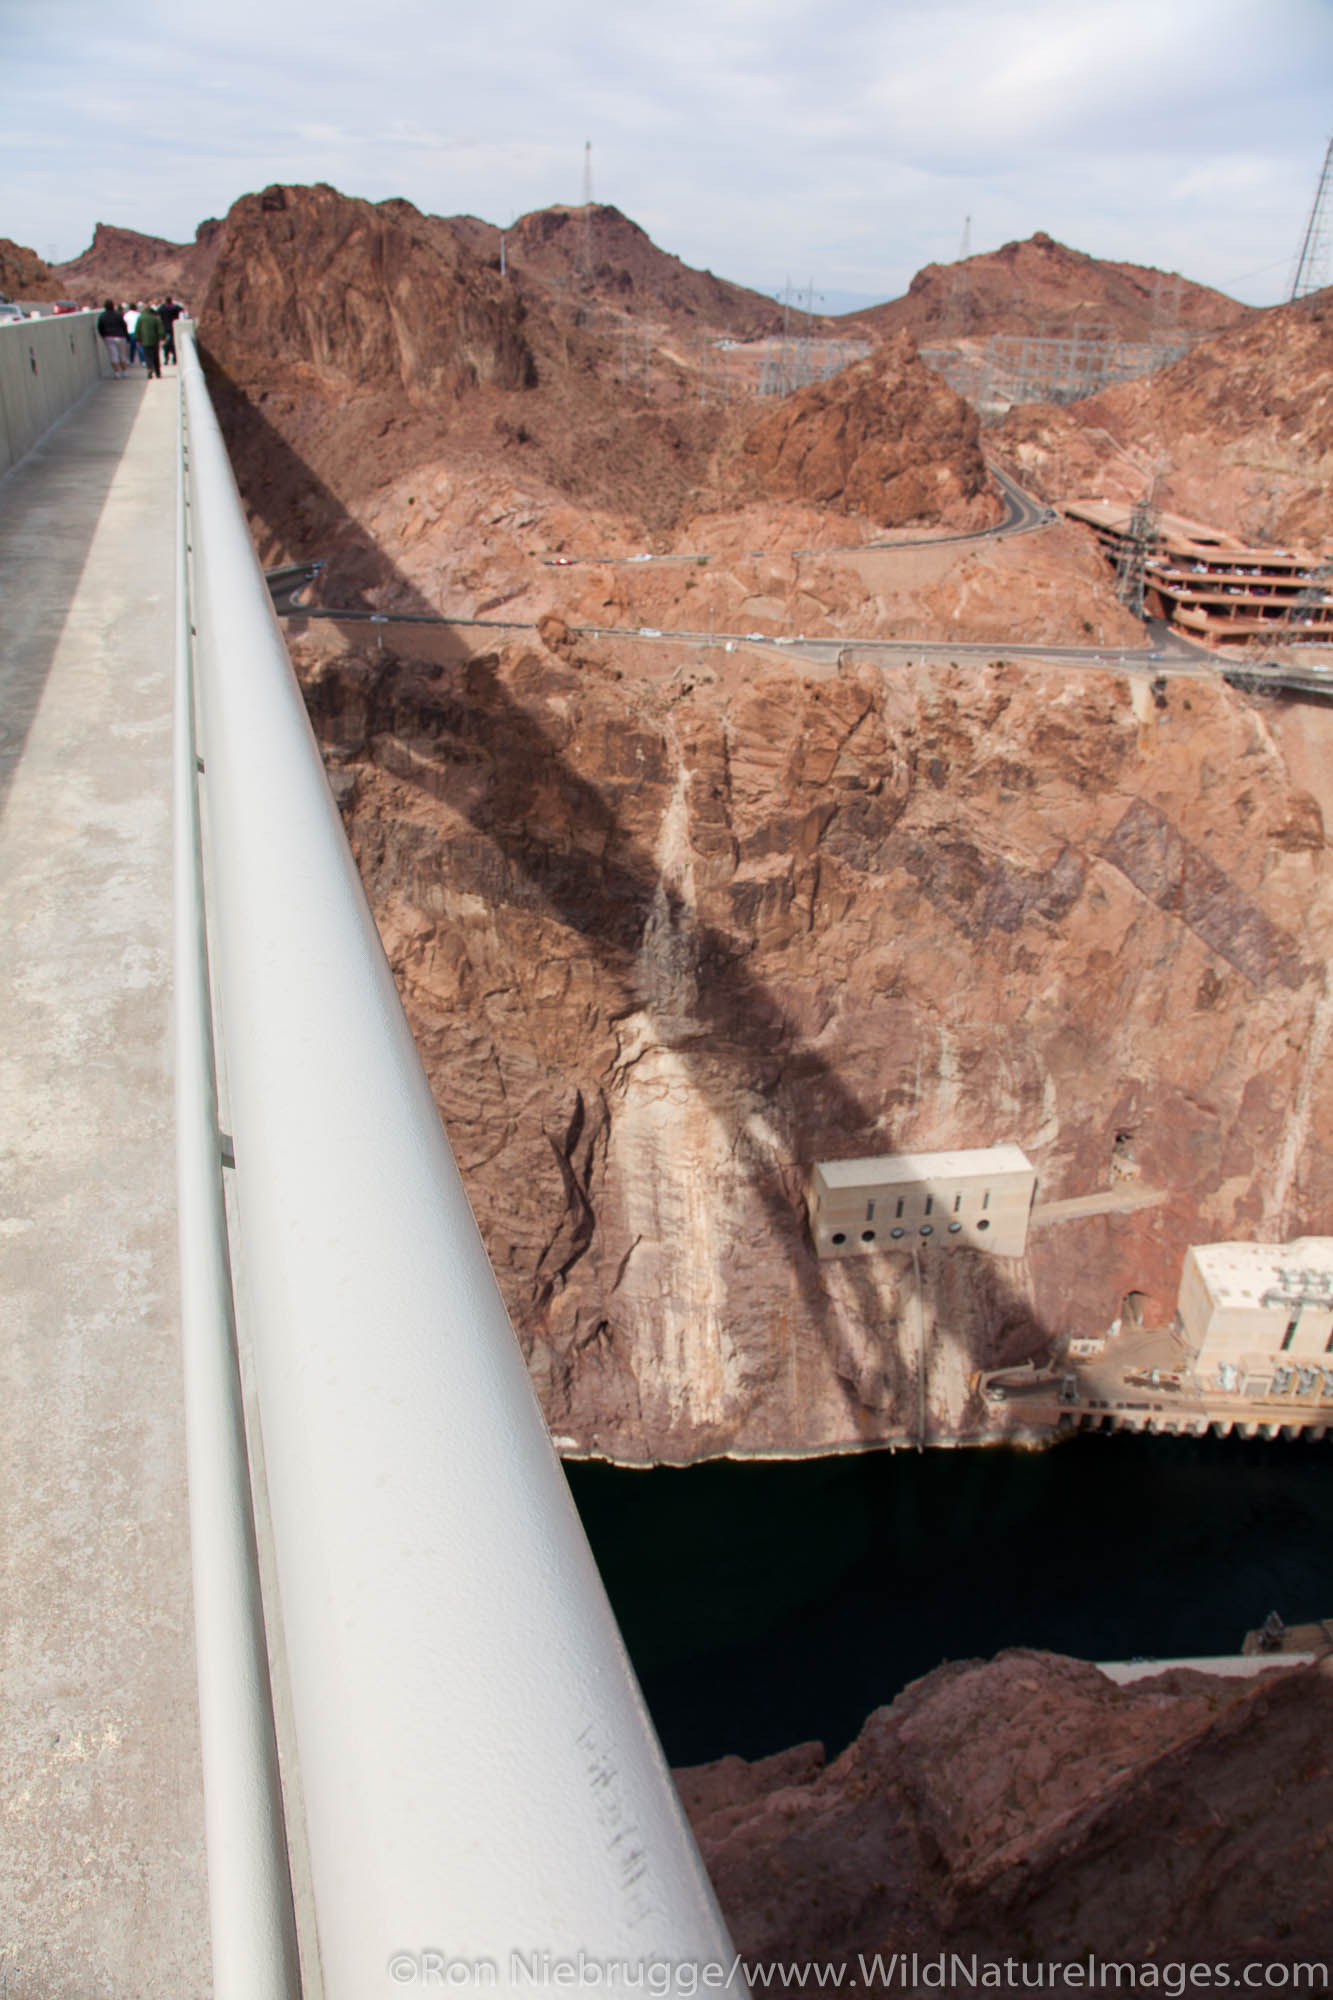 Mike O'Callaghan – Pat Tillman Memorial Bridge also called the Hoover Dam Bypass, Mojave Desert, Nevada